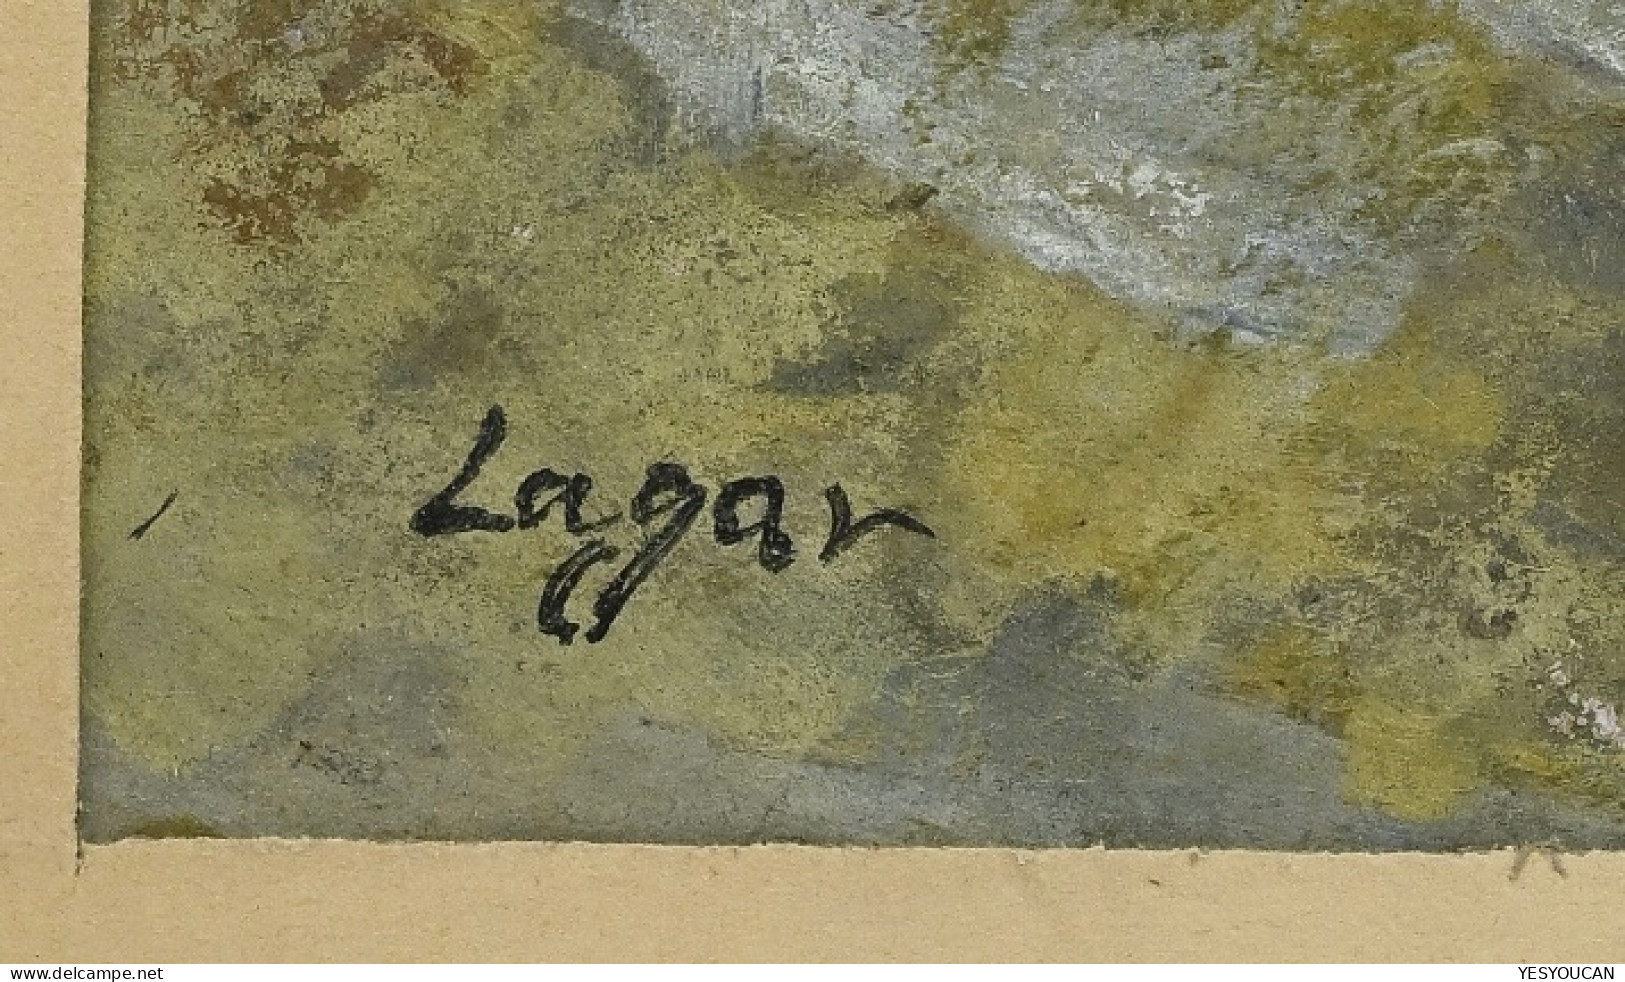 CELSO LAGAR (1891Ciudad Rodrigo España-1966Sevilla)Corrida De Toros (Modigliani Spanish Expressionist Art école De Paris - Tempere